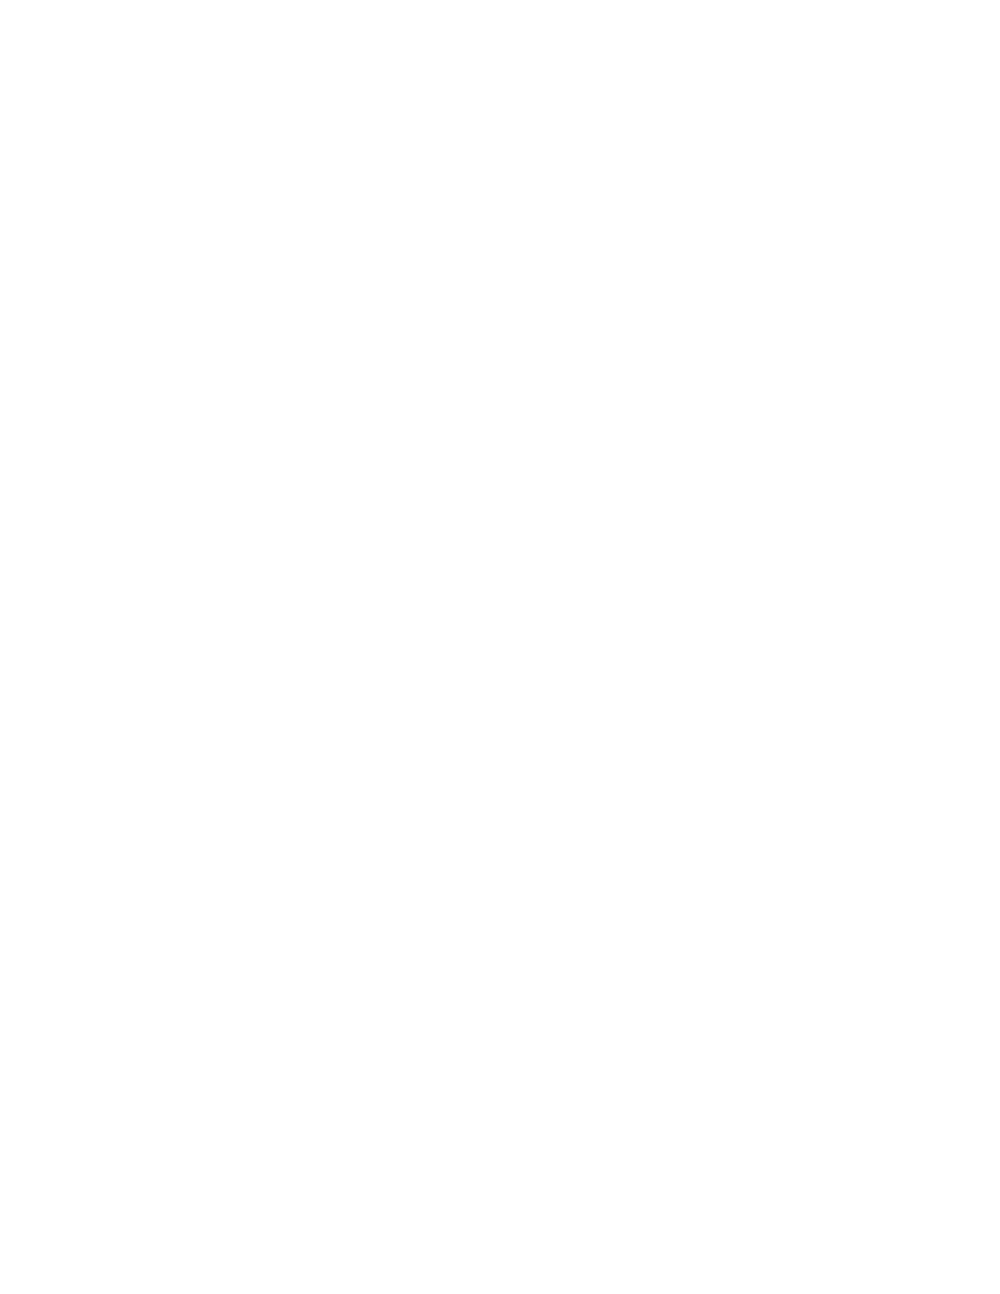 Universidad Nacional Autónomá de México